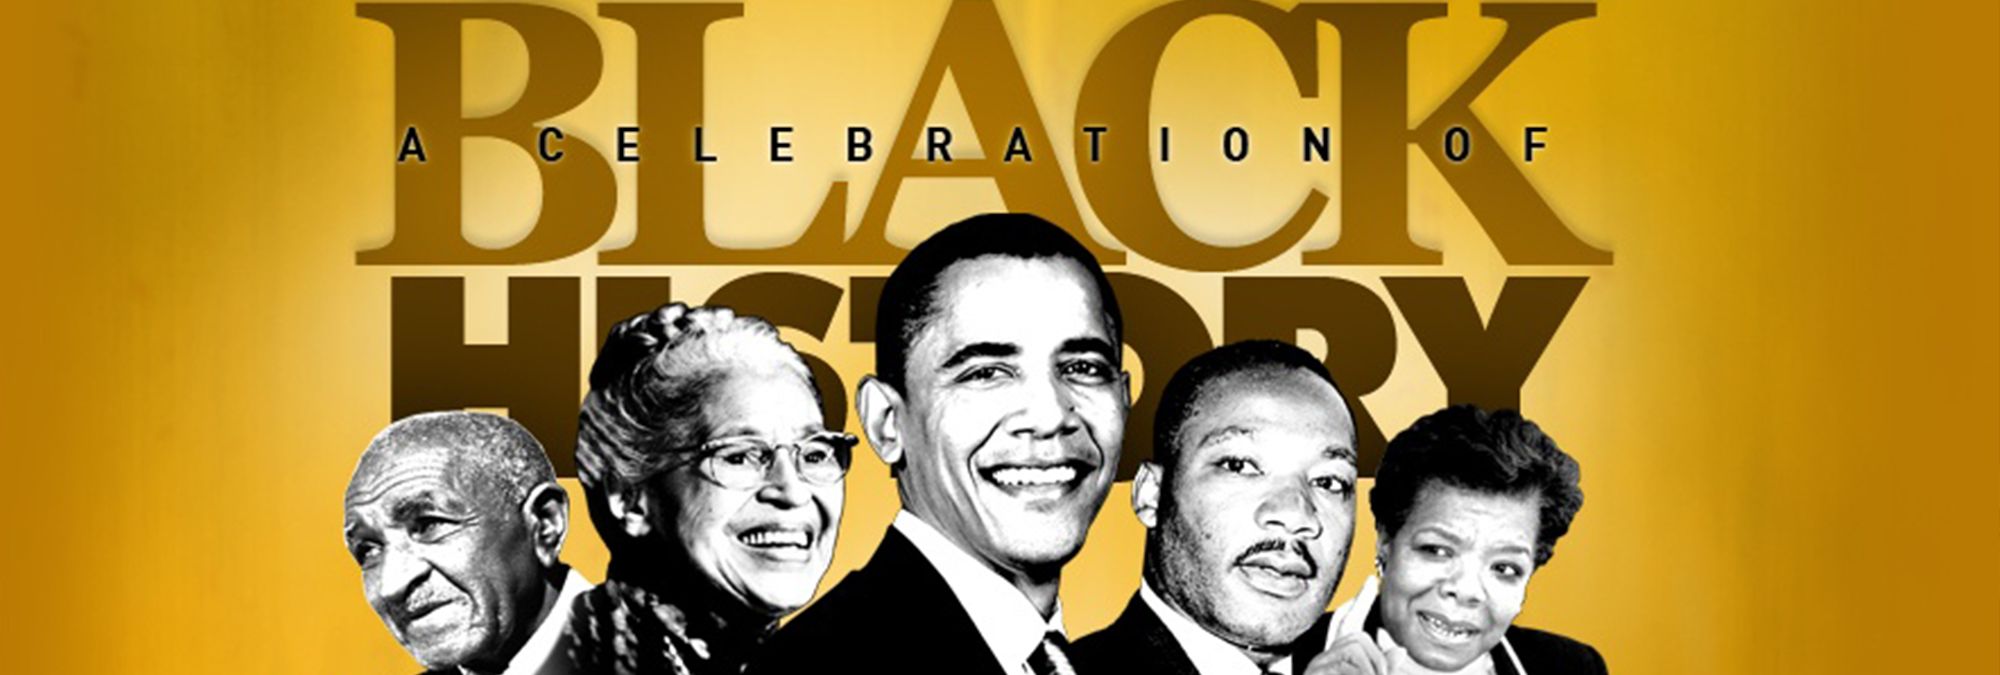 Black history month celebration poster